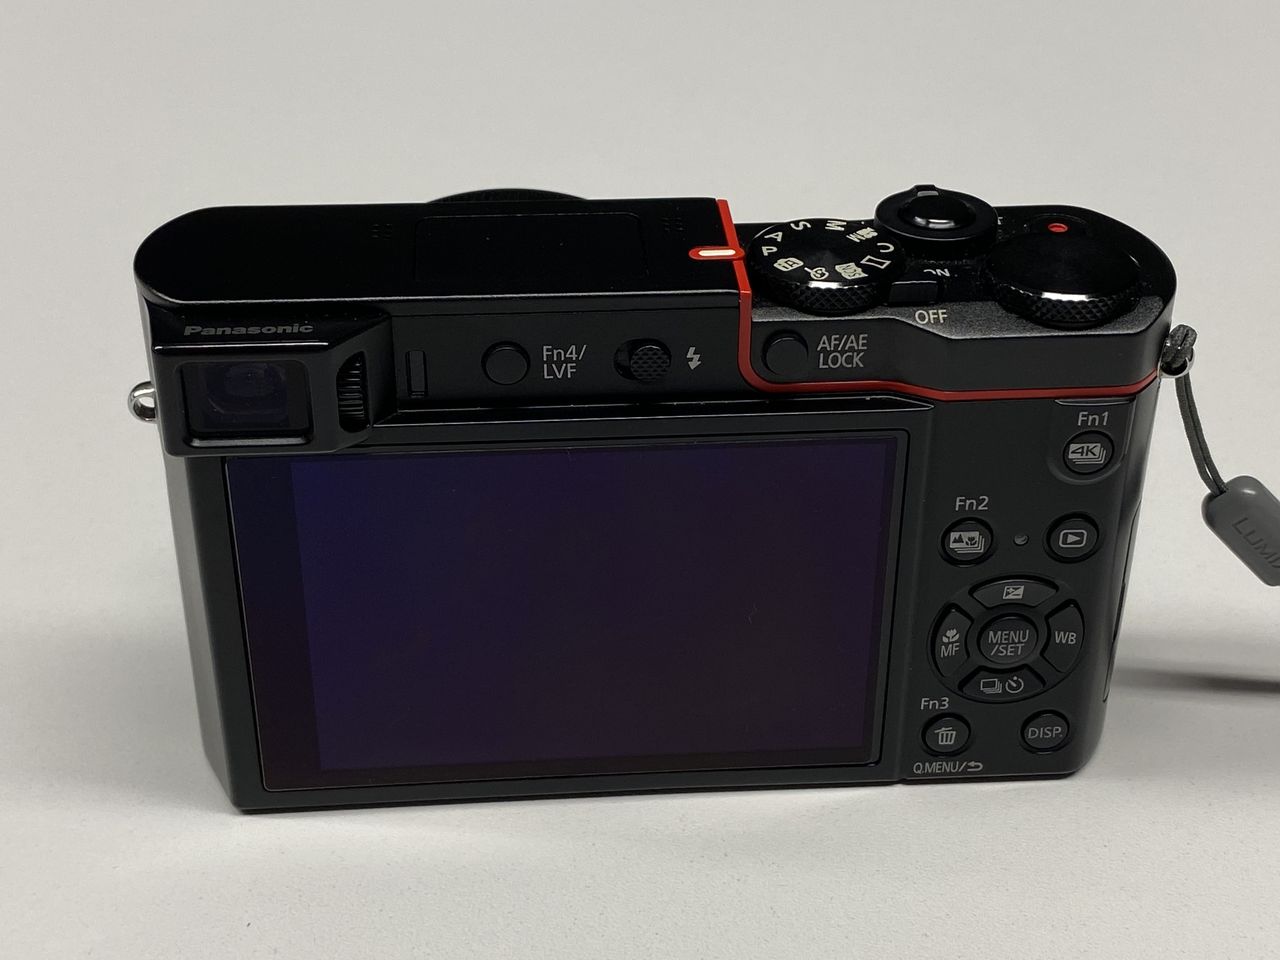  [VENDU]Compact Panasonic TZ101 noir garanti 09.2020+1batterie- 250€ 19122002271121133516566575